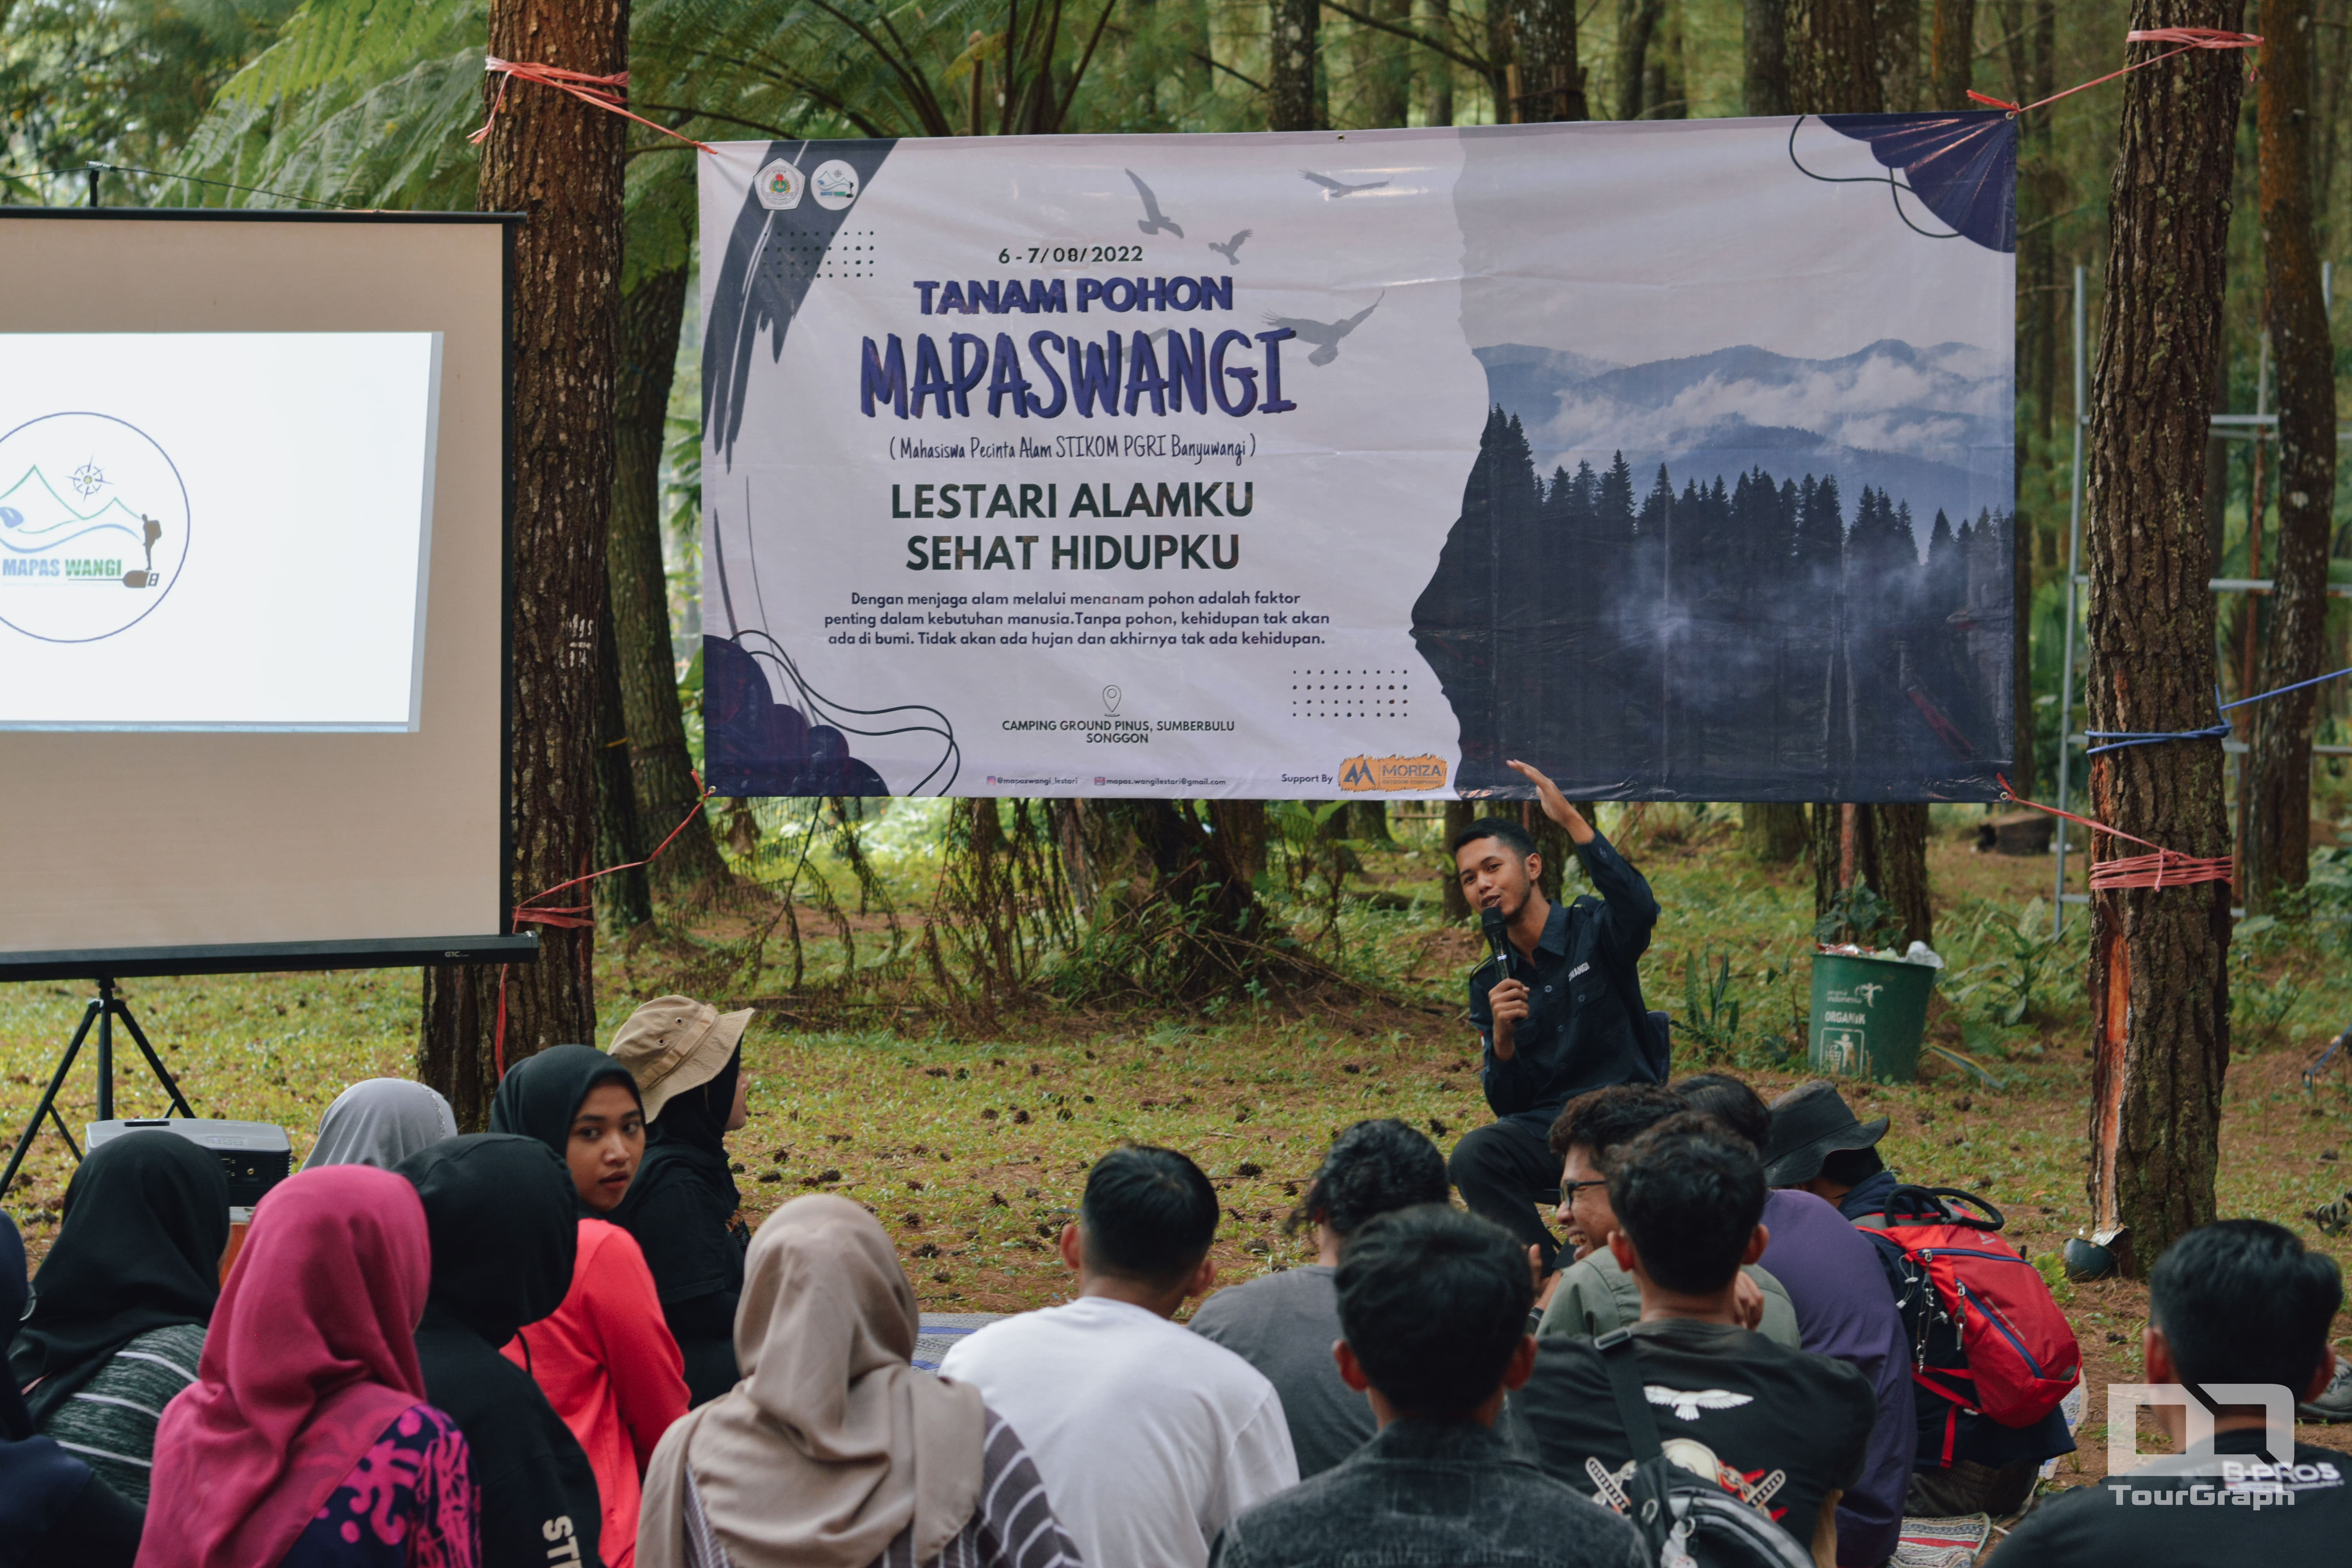 MAPASWANGI UKM dari STIKOM PGRI Banyuwangi Camping sambil menjalankan PROKER Tanam Pohon